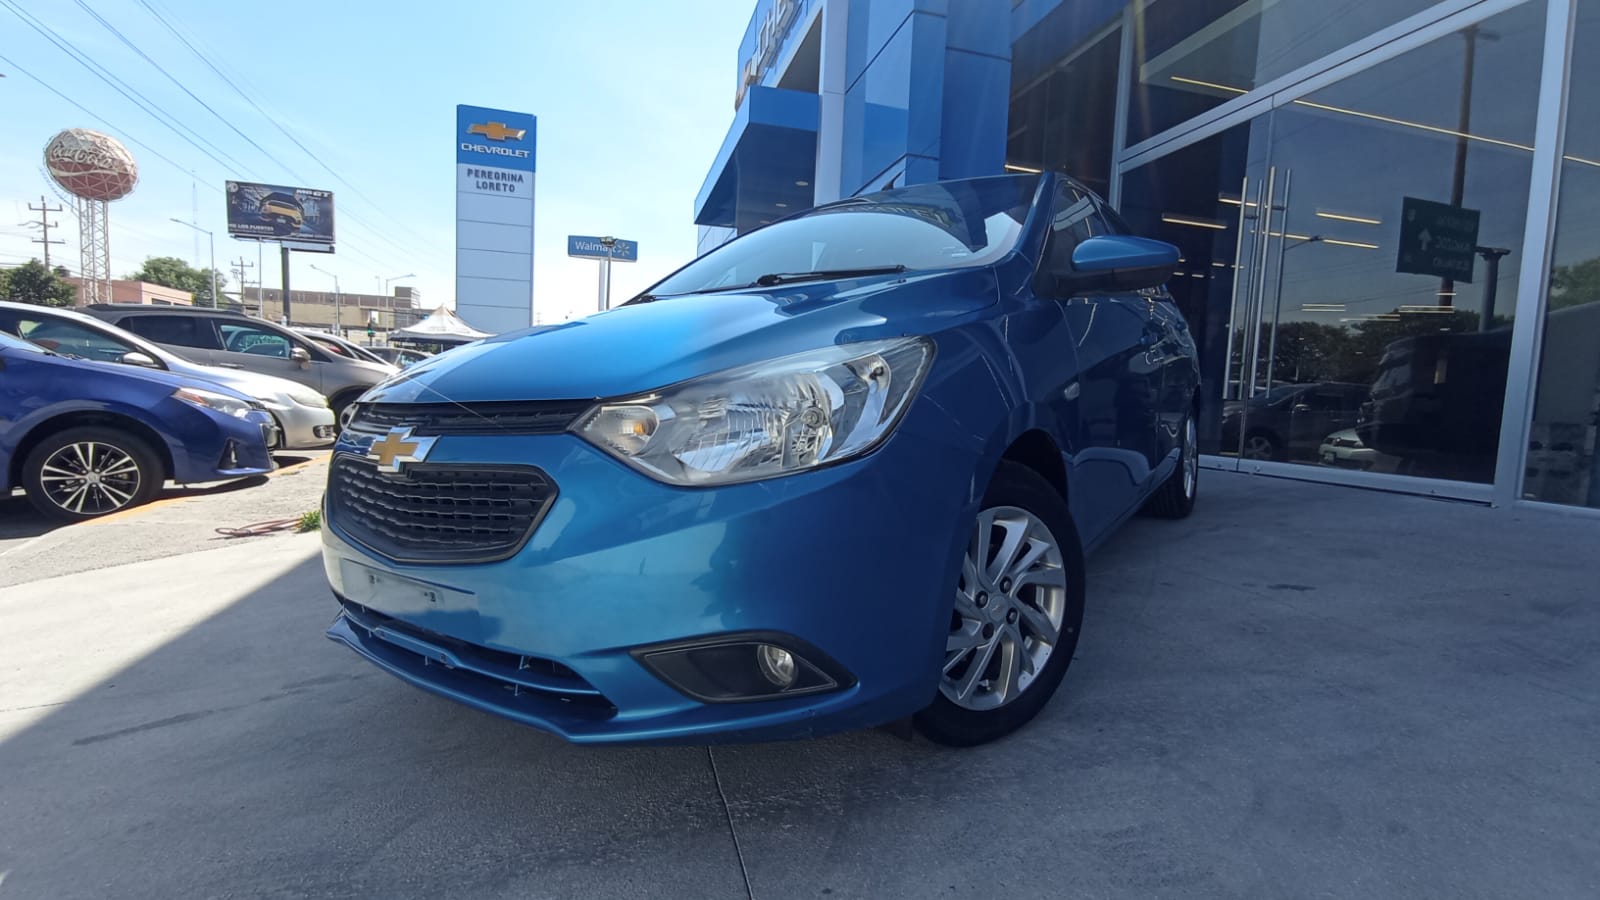 Chevrolet Aveo LT Paq "C" Color Azul Oceano 2018 Mt